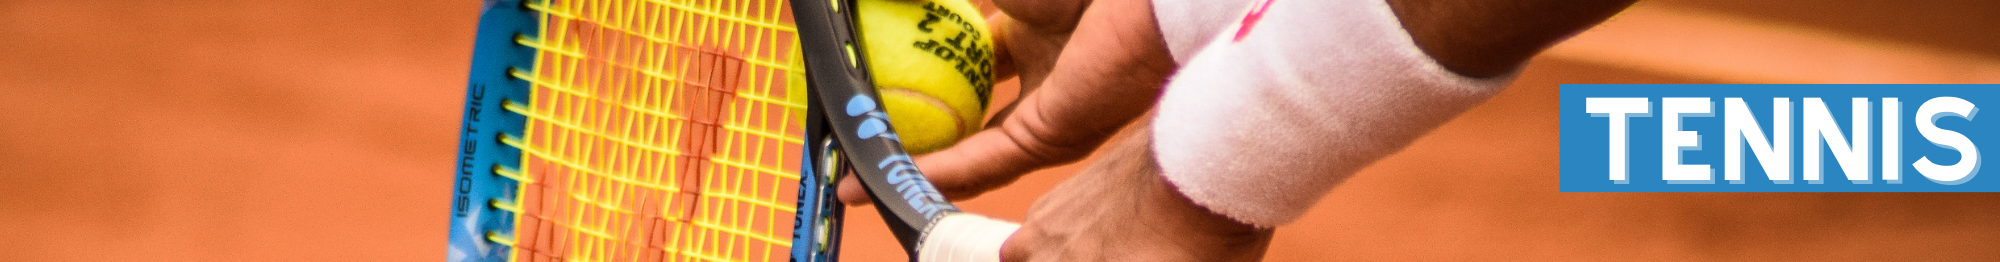 Tennis11